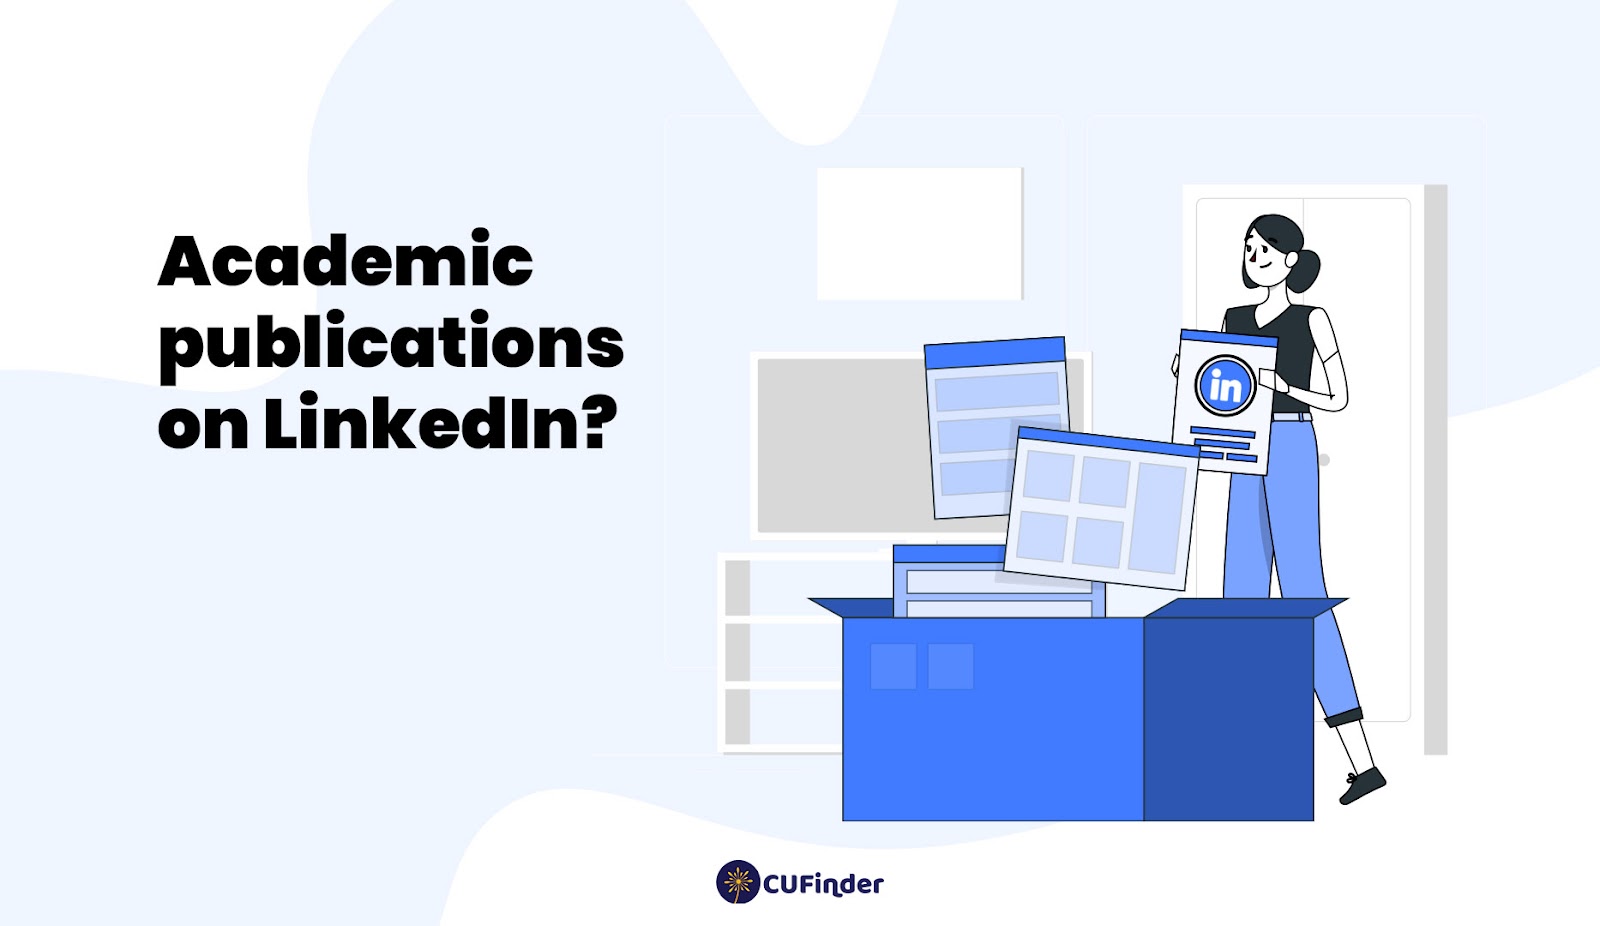 Academic publications on LinkedIn?